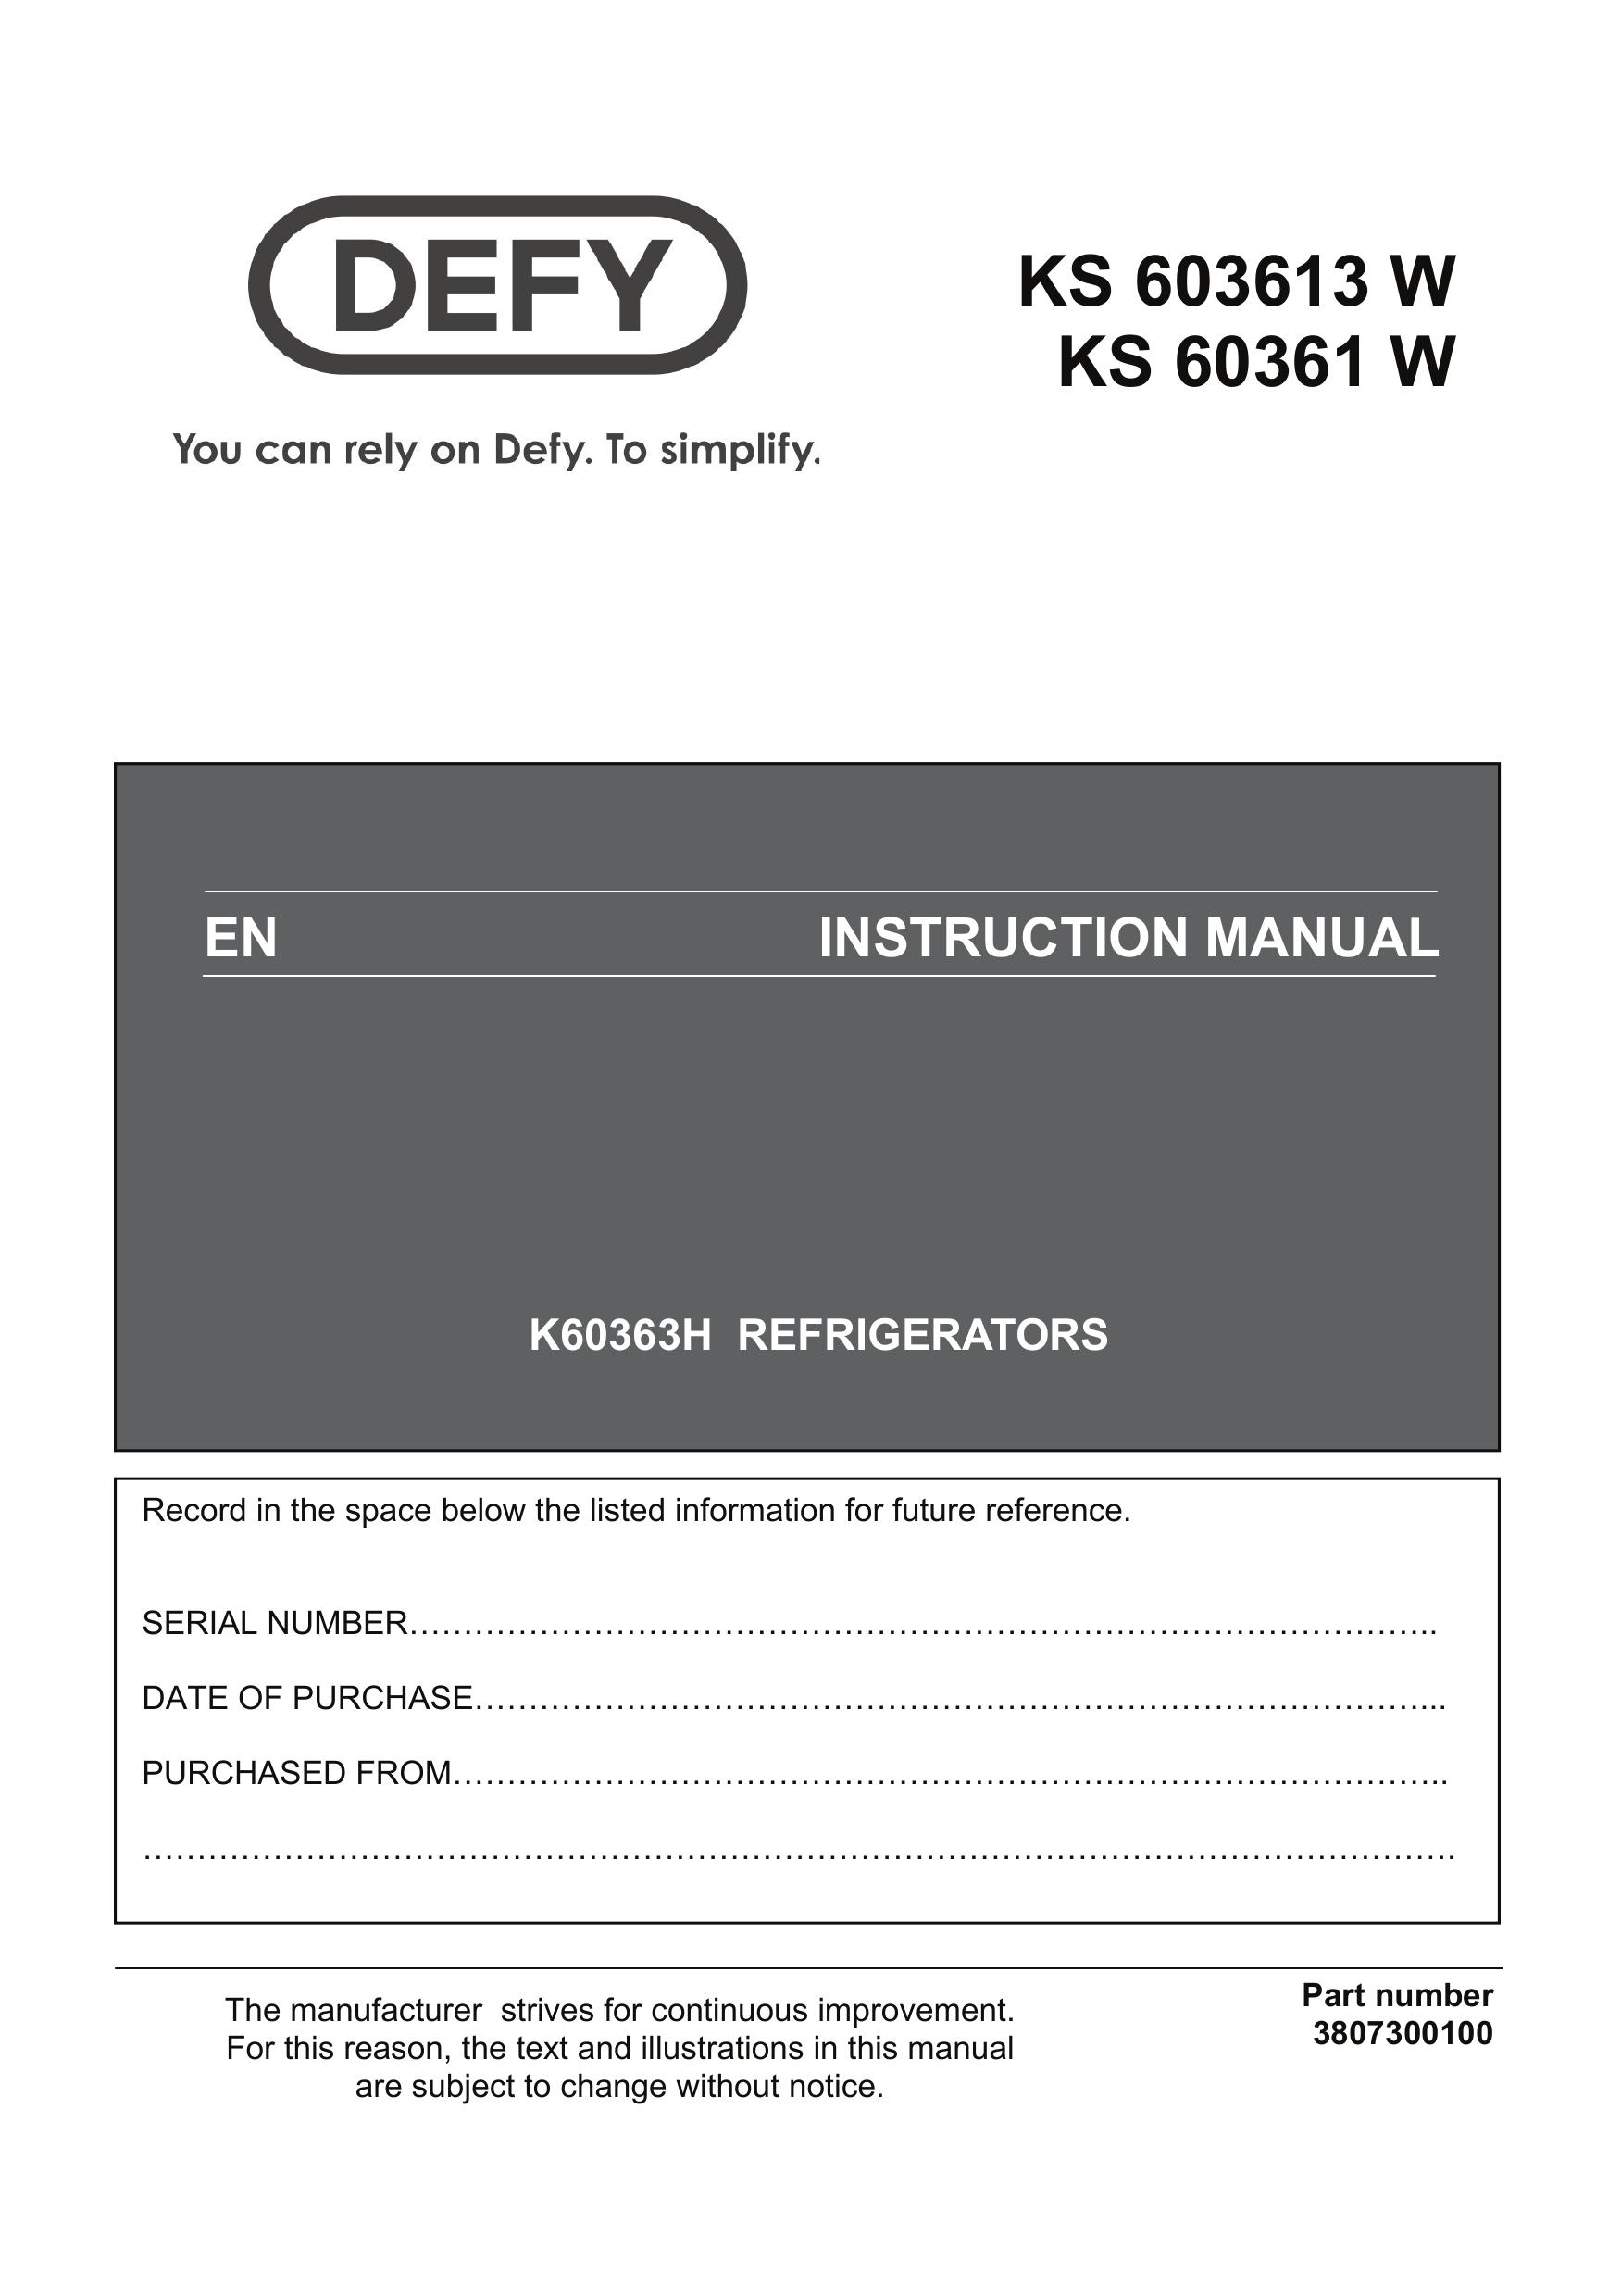 Defy Appliances KS 603613 W Refrigerator User Manual